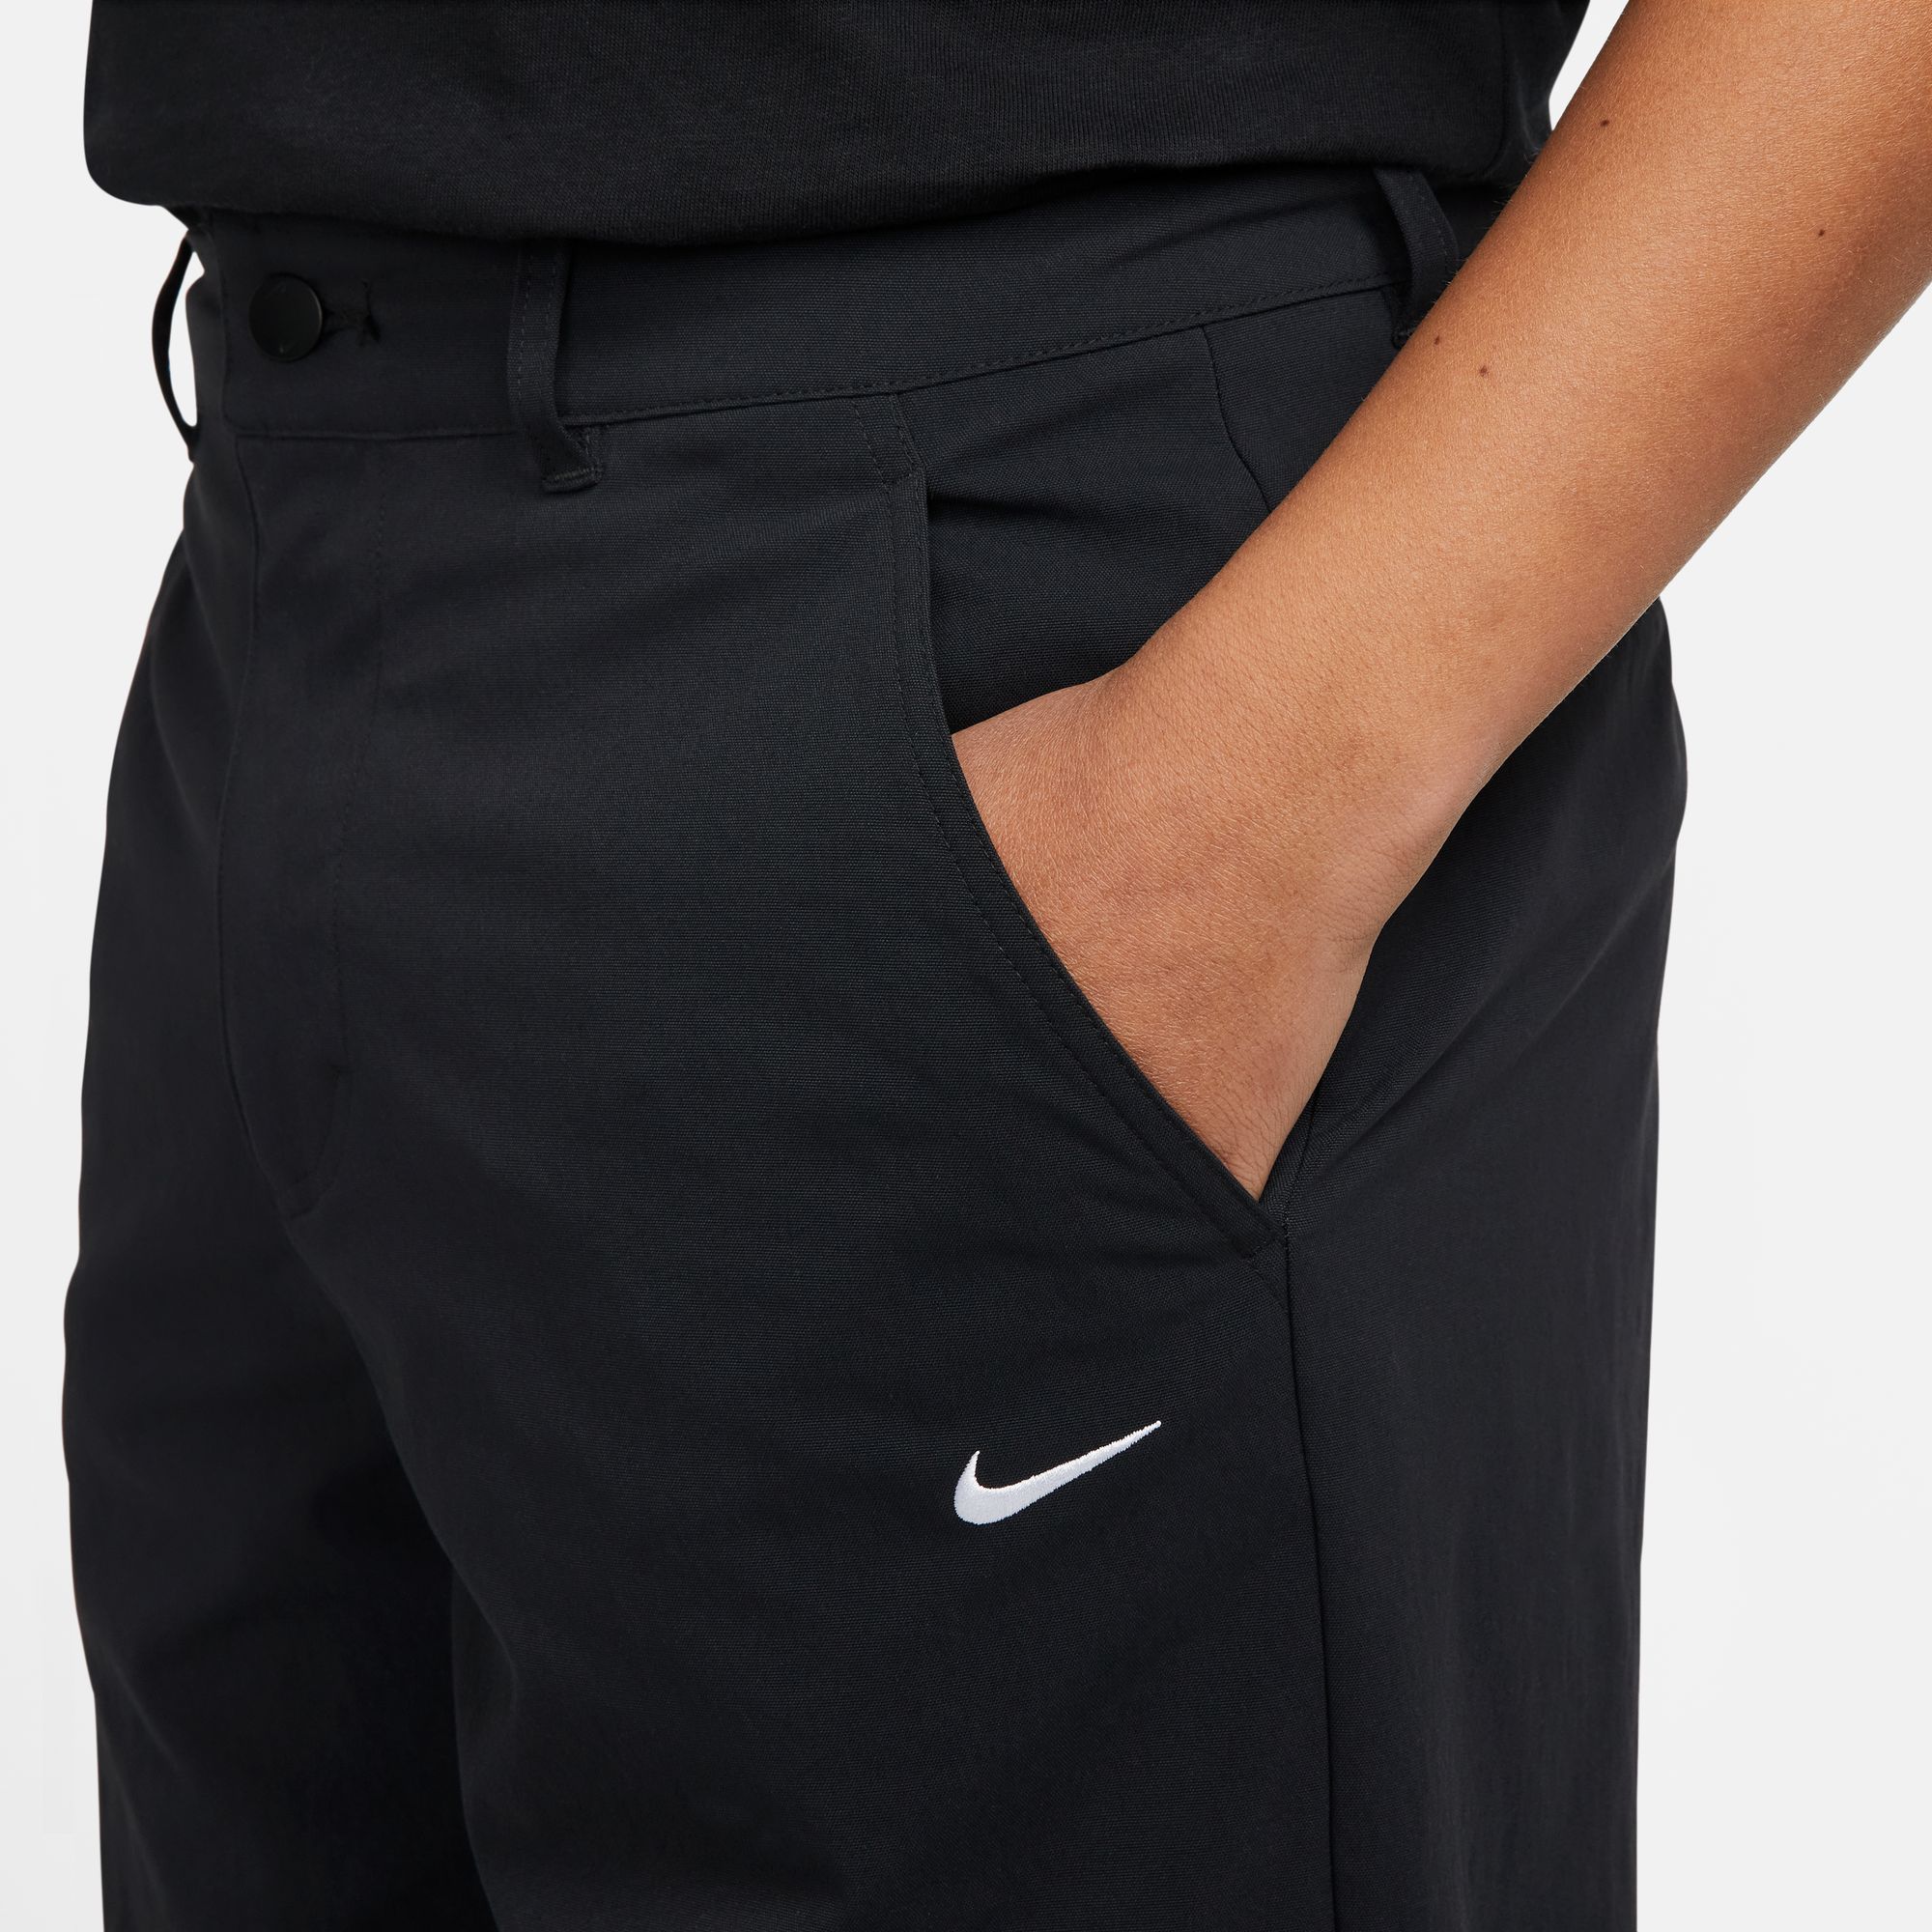 Nike SB Chino Skate Pants Black